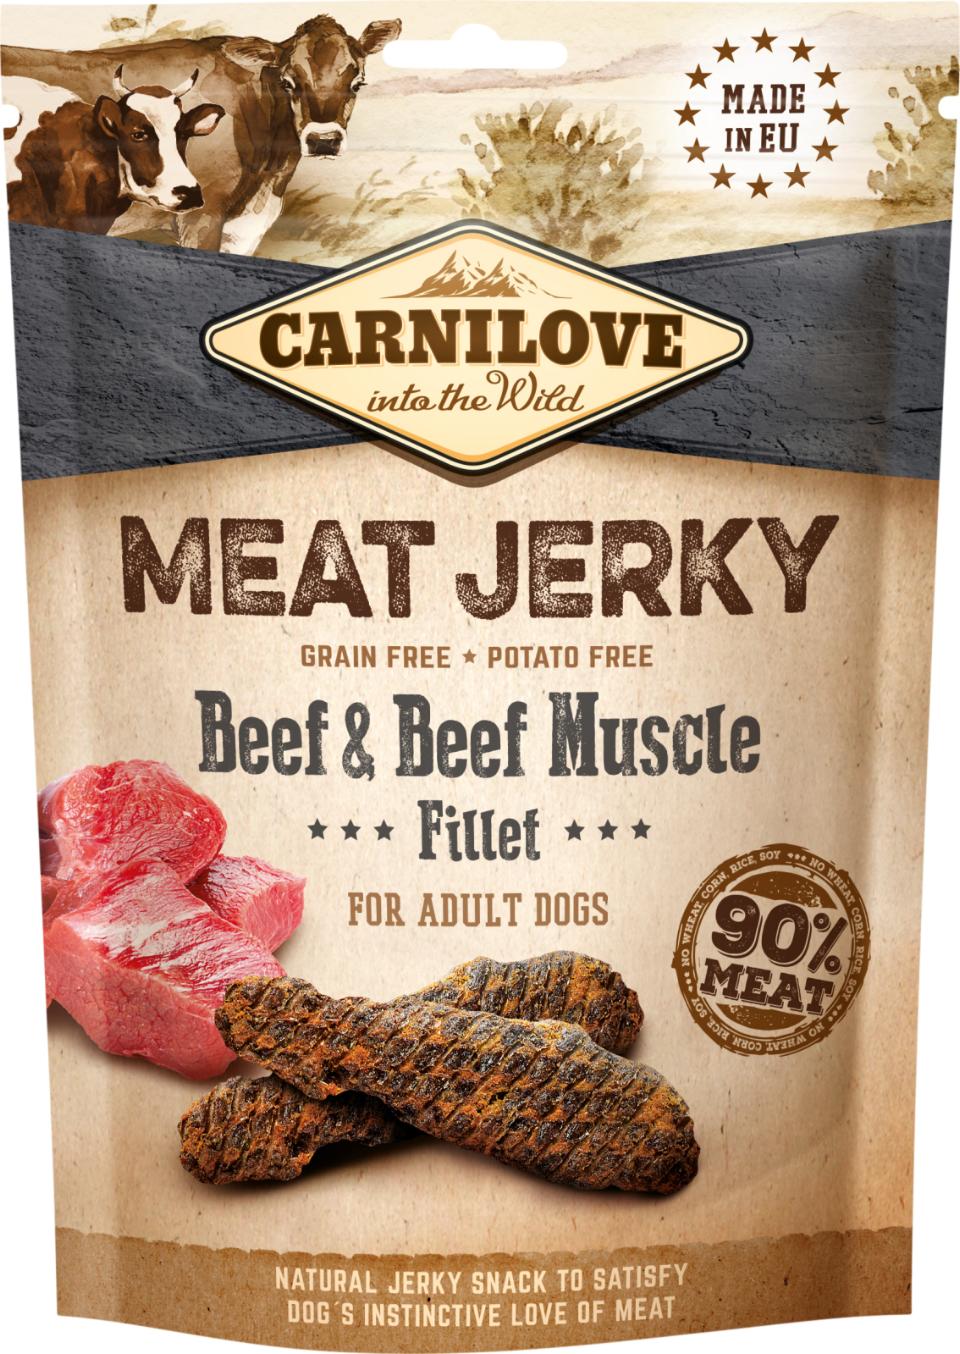 Jerky Beef & Beef Muscle Fillet